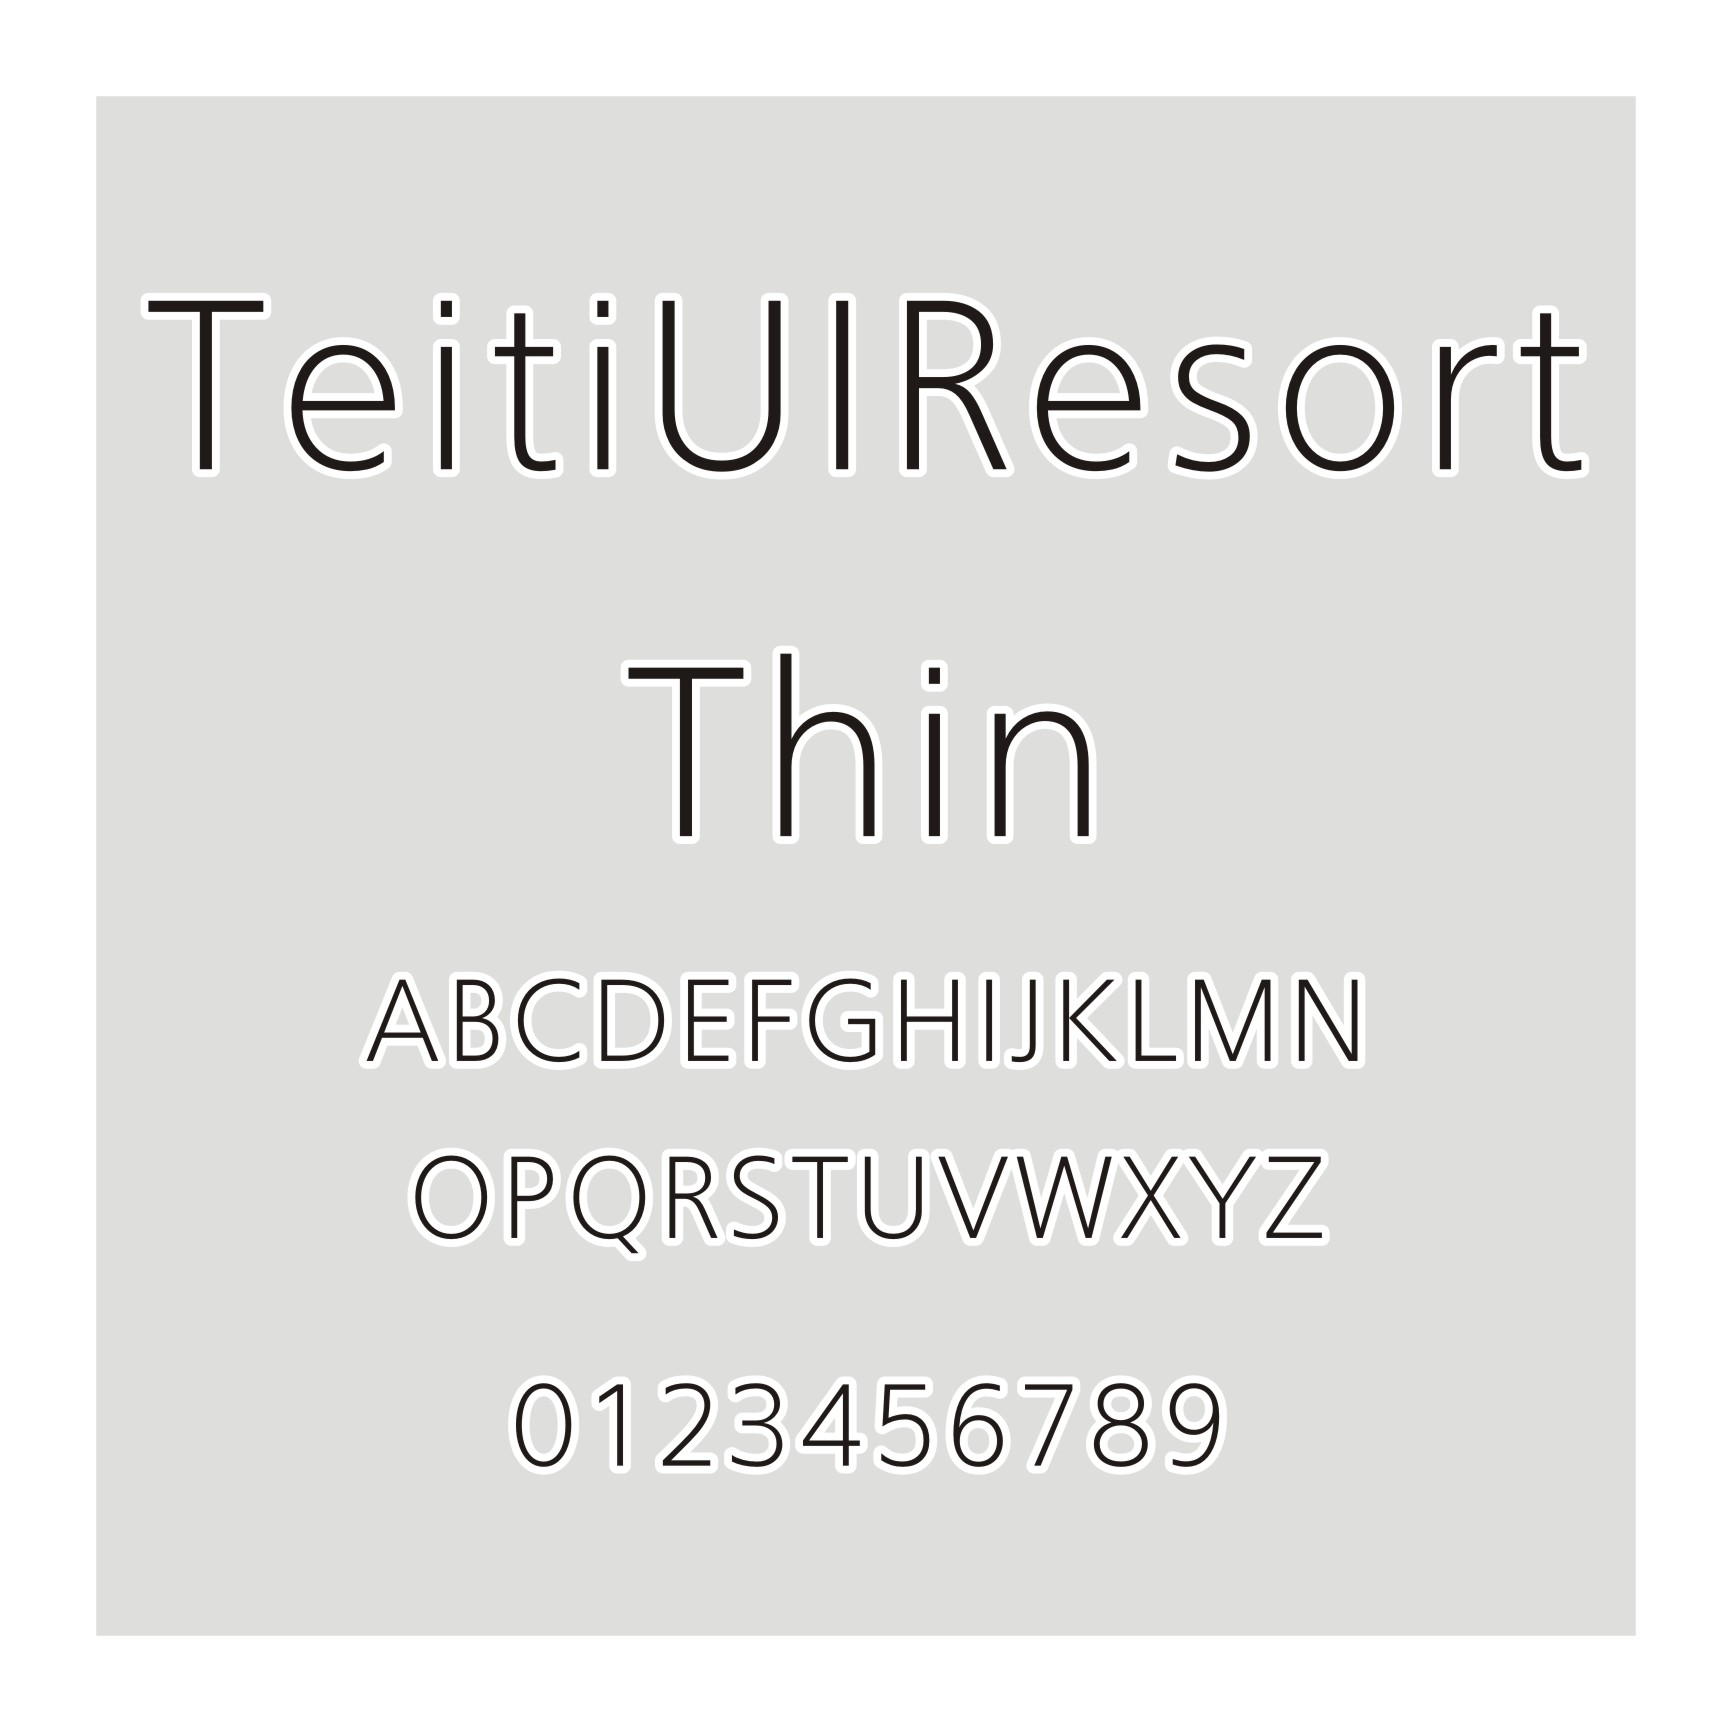 TeitiUIResort Thin